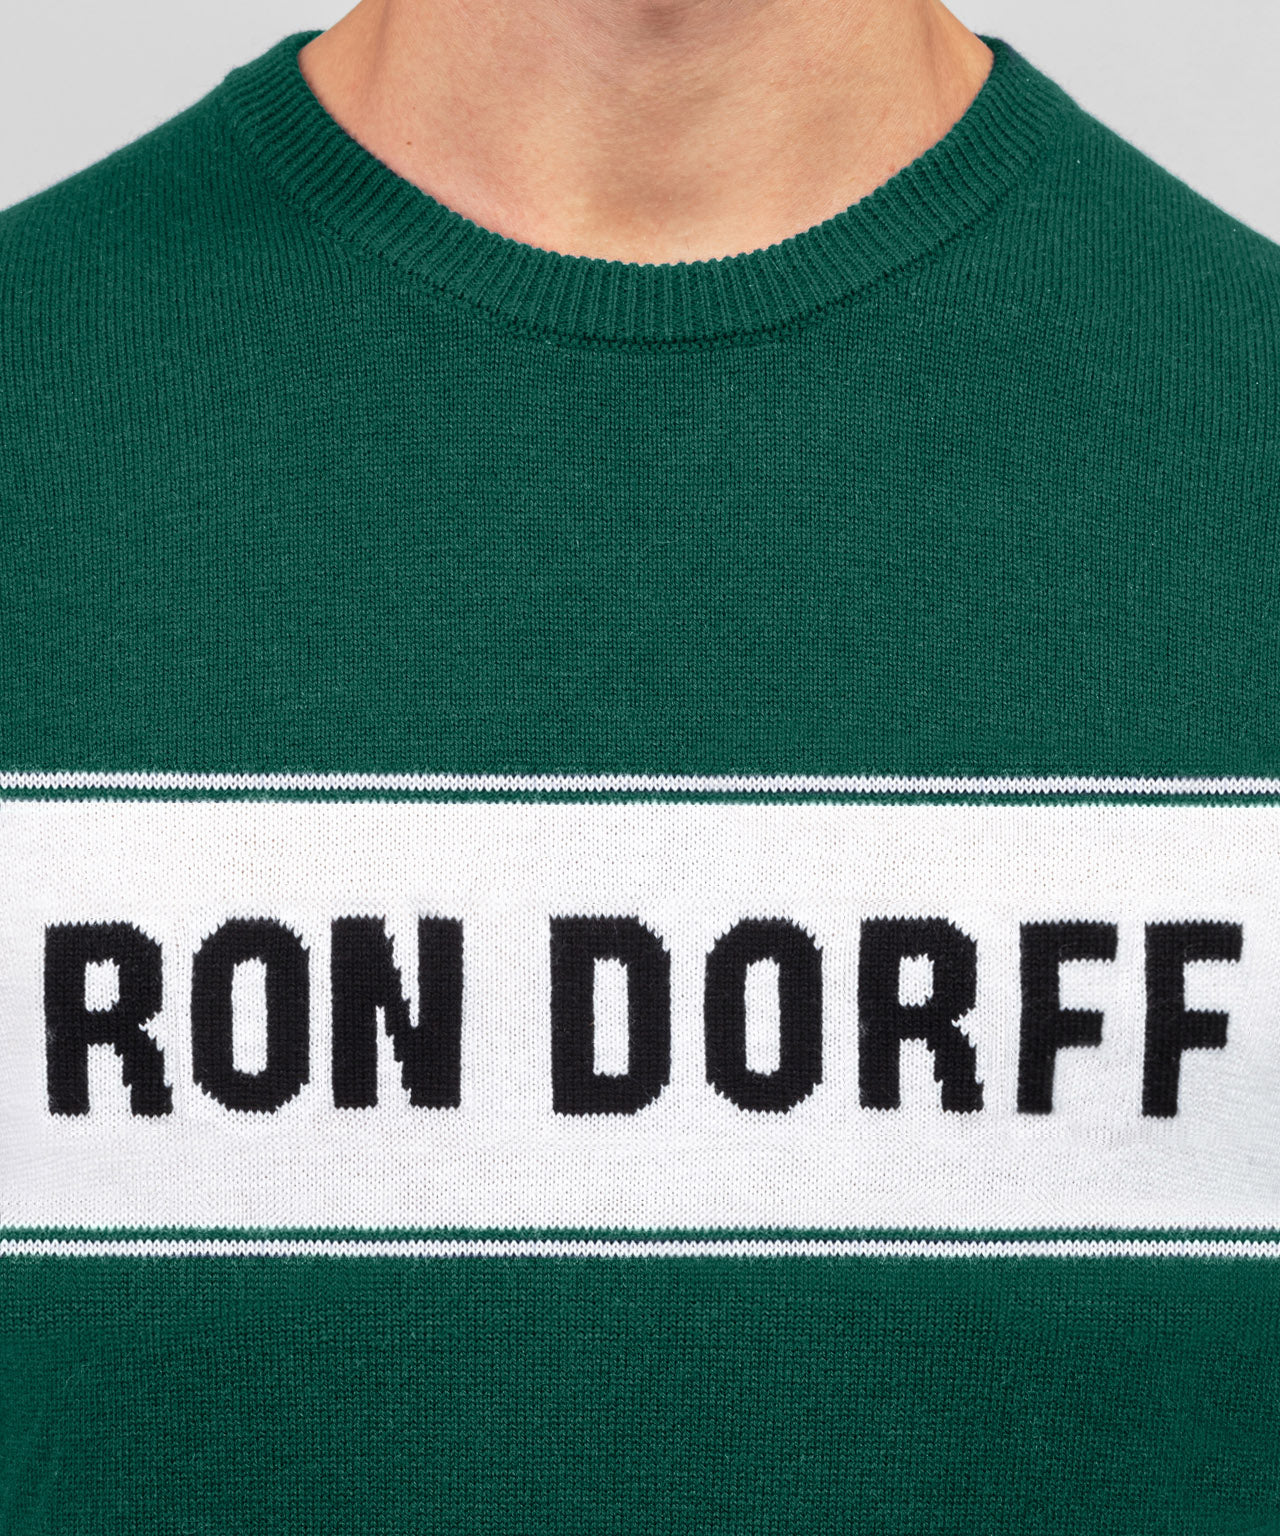 Cotton-Wool RON DORFF Sweater: Chalet Green